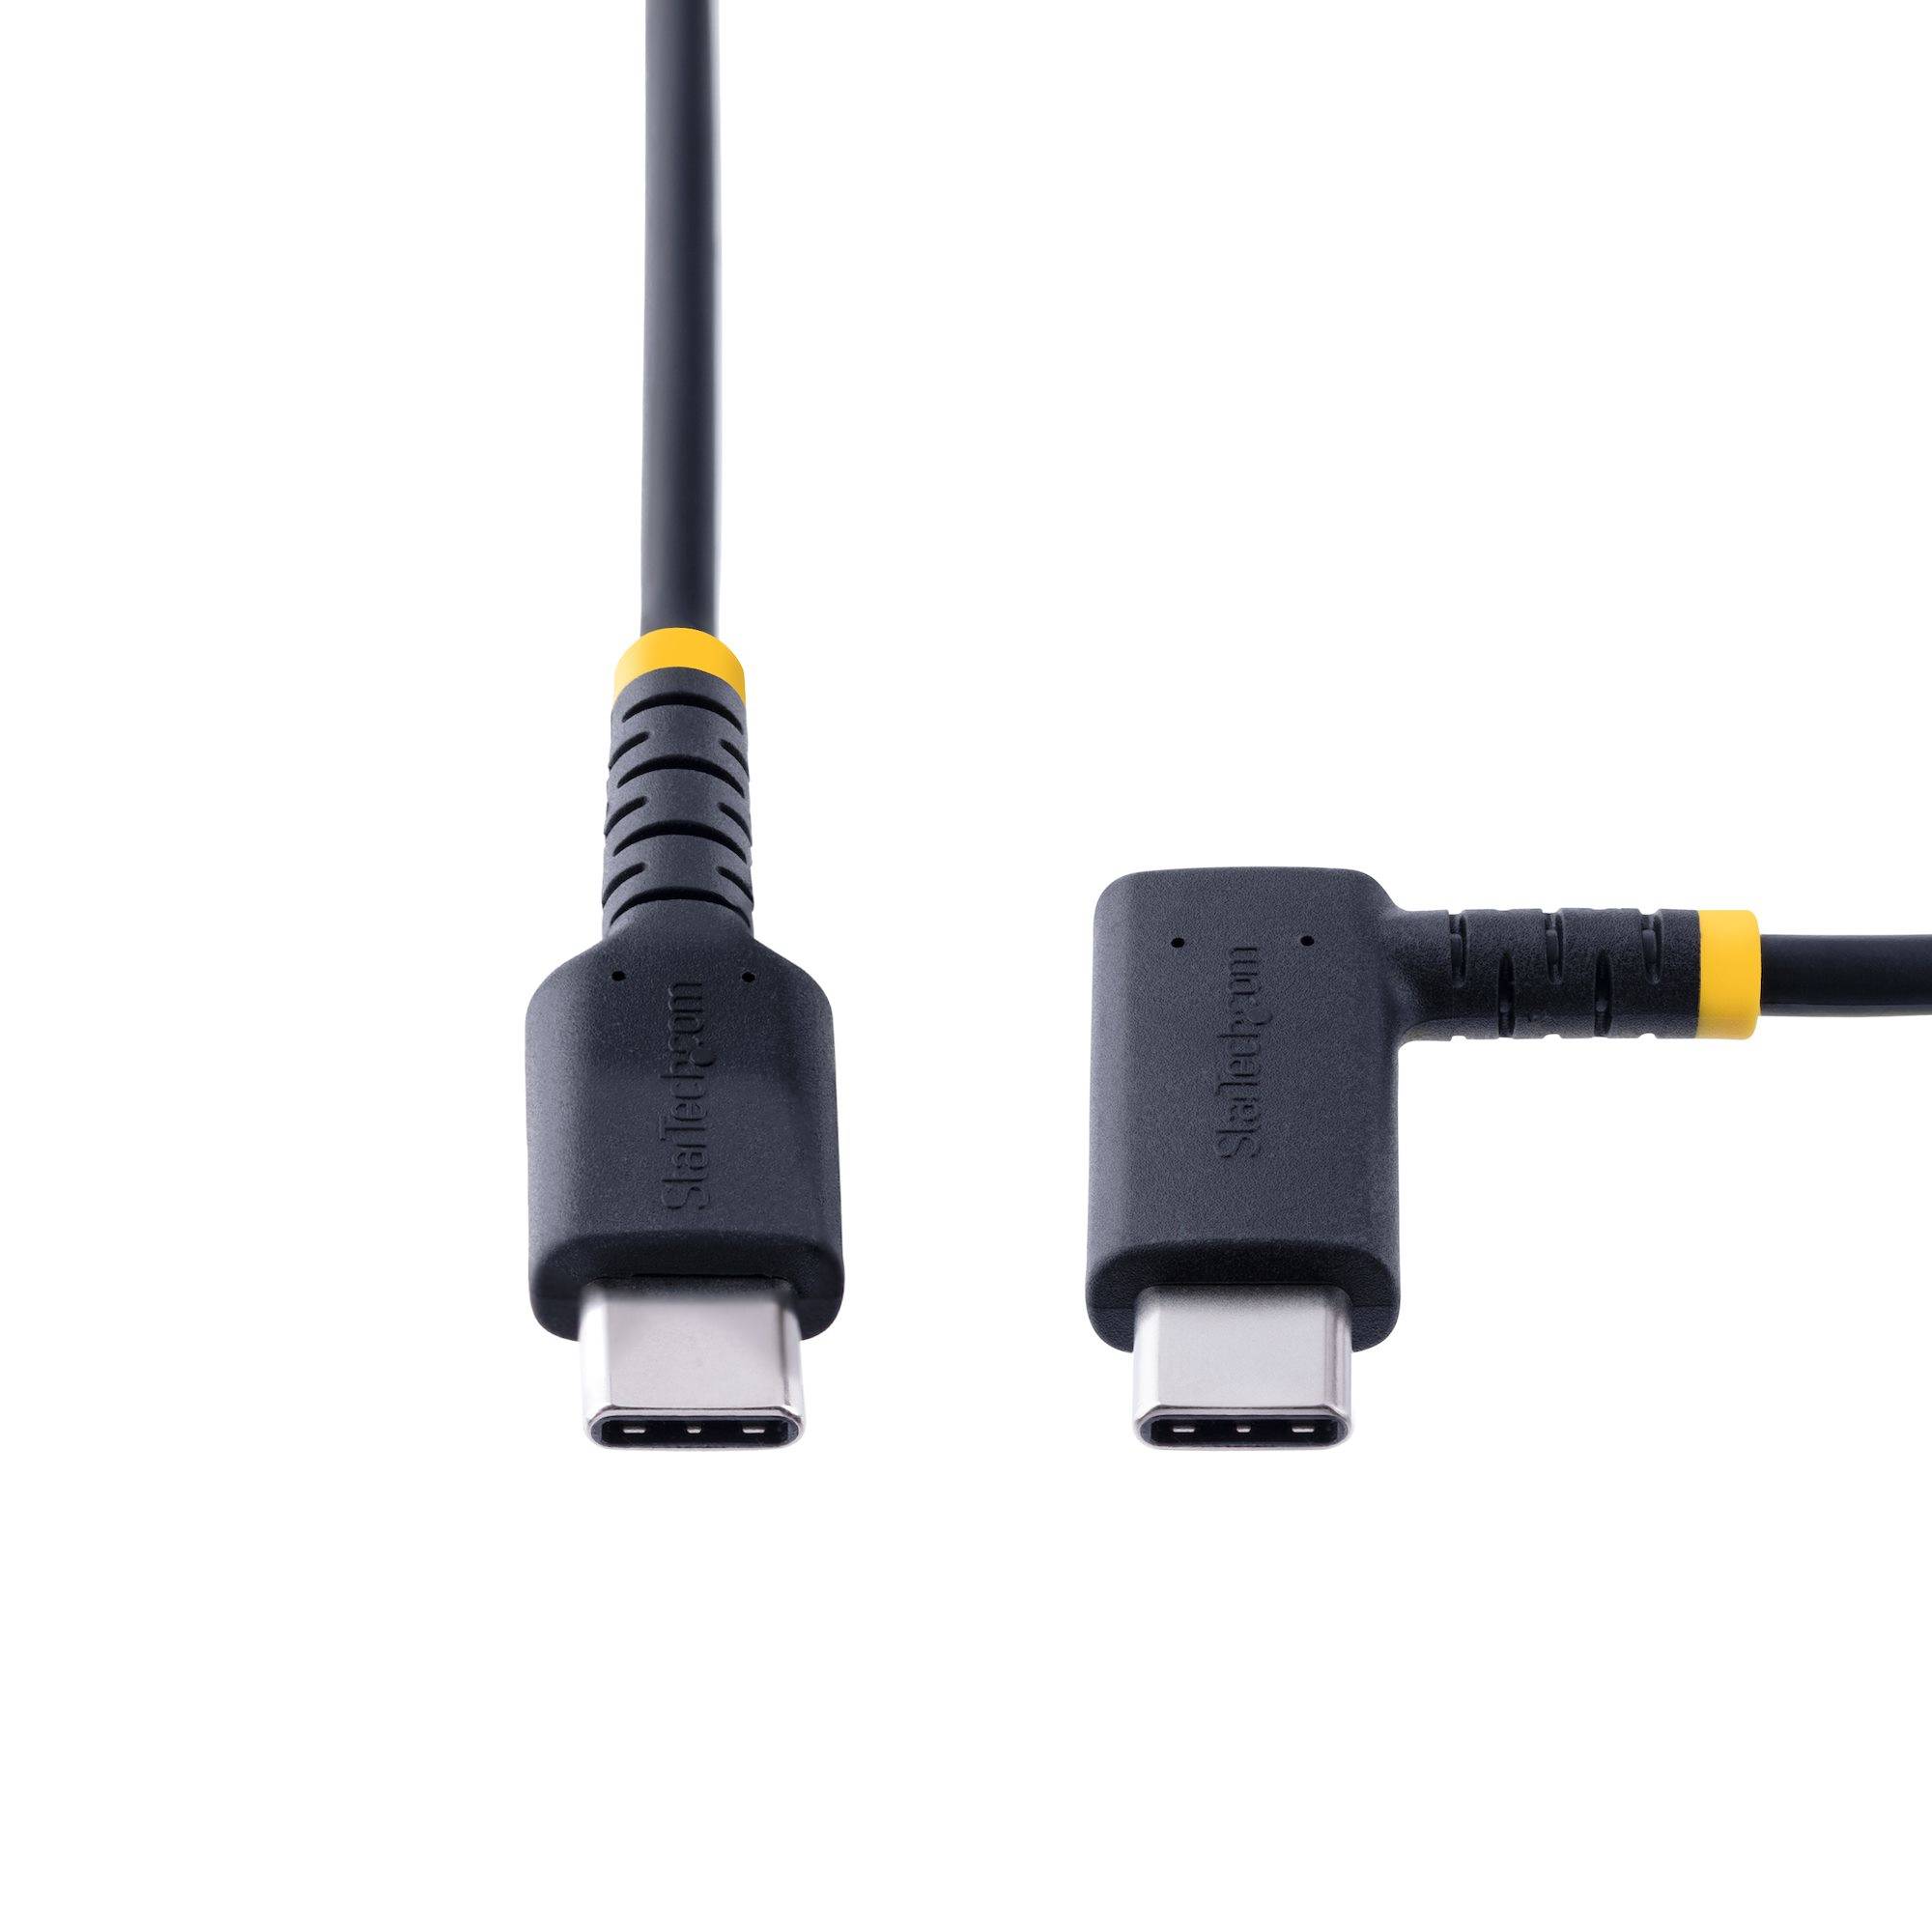 Rca Informatique - image du produit : 2M USB-C CHARGING CABLE FAST CHARGE - RIGHT ANGLE USBC CABLE